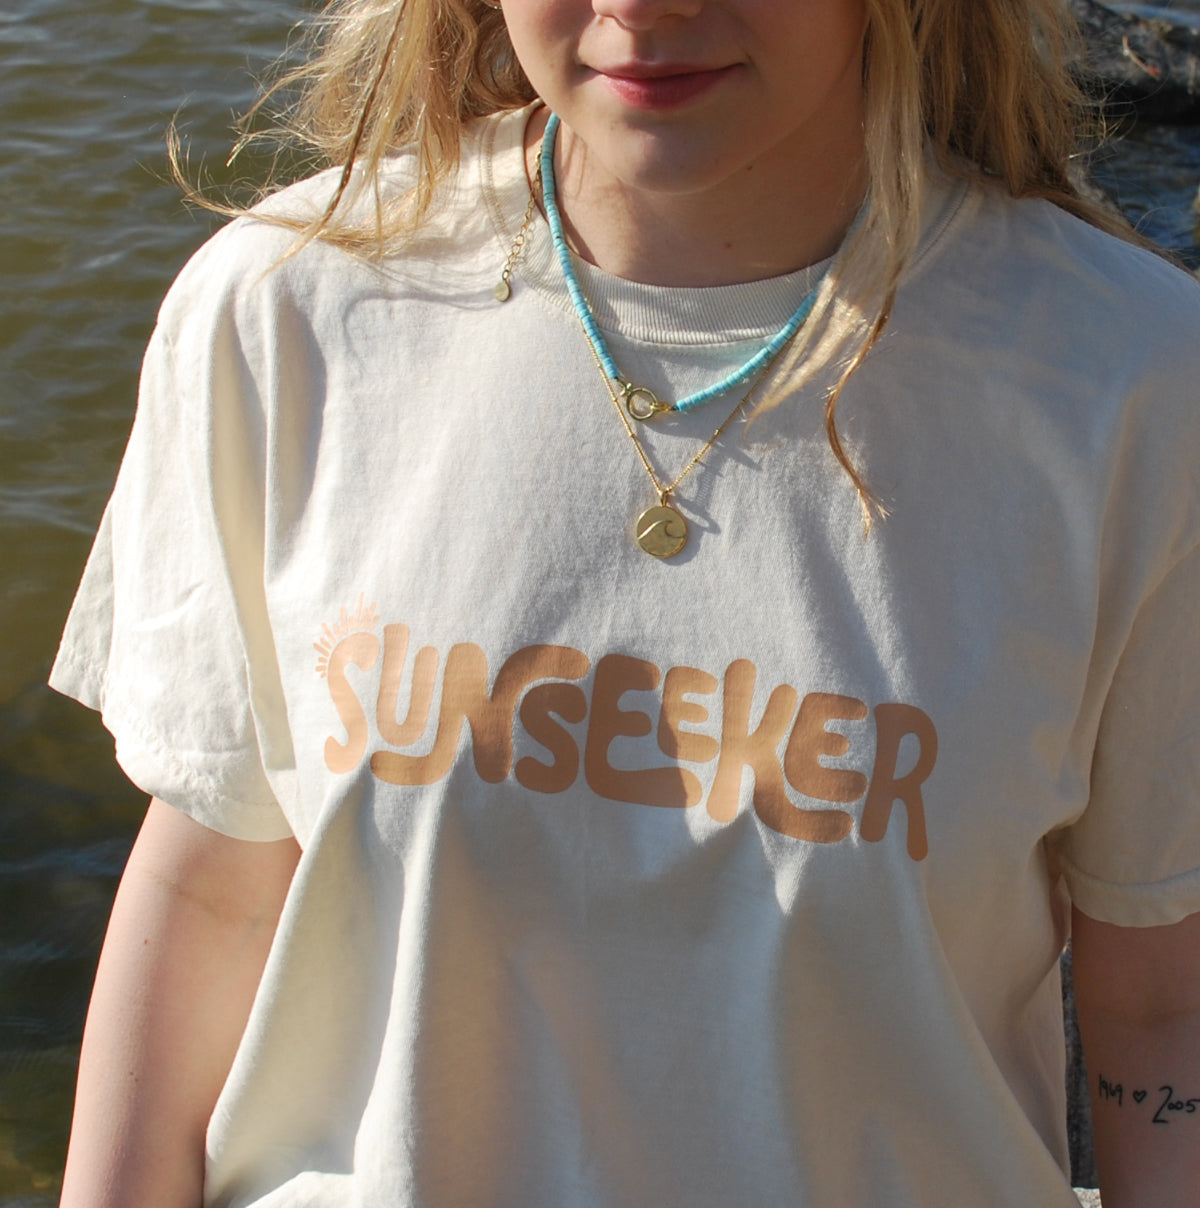 SunSeeker | Wave-Washed T-Shirt